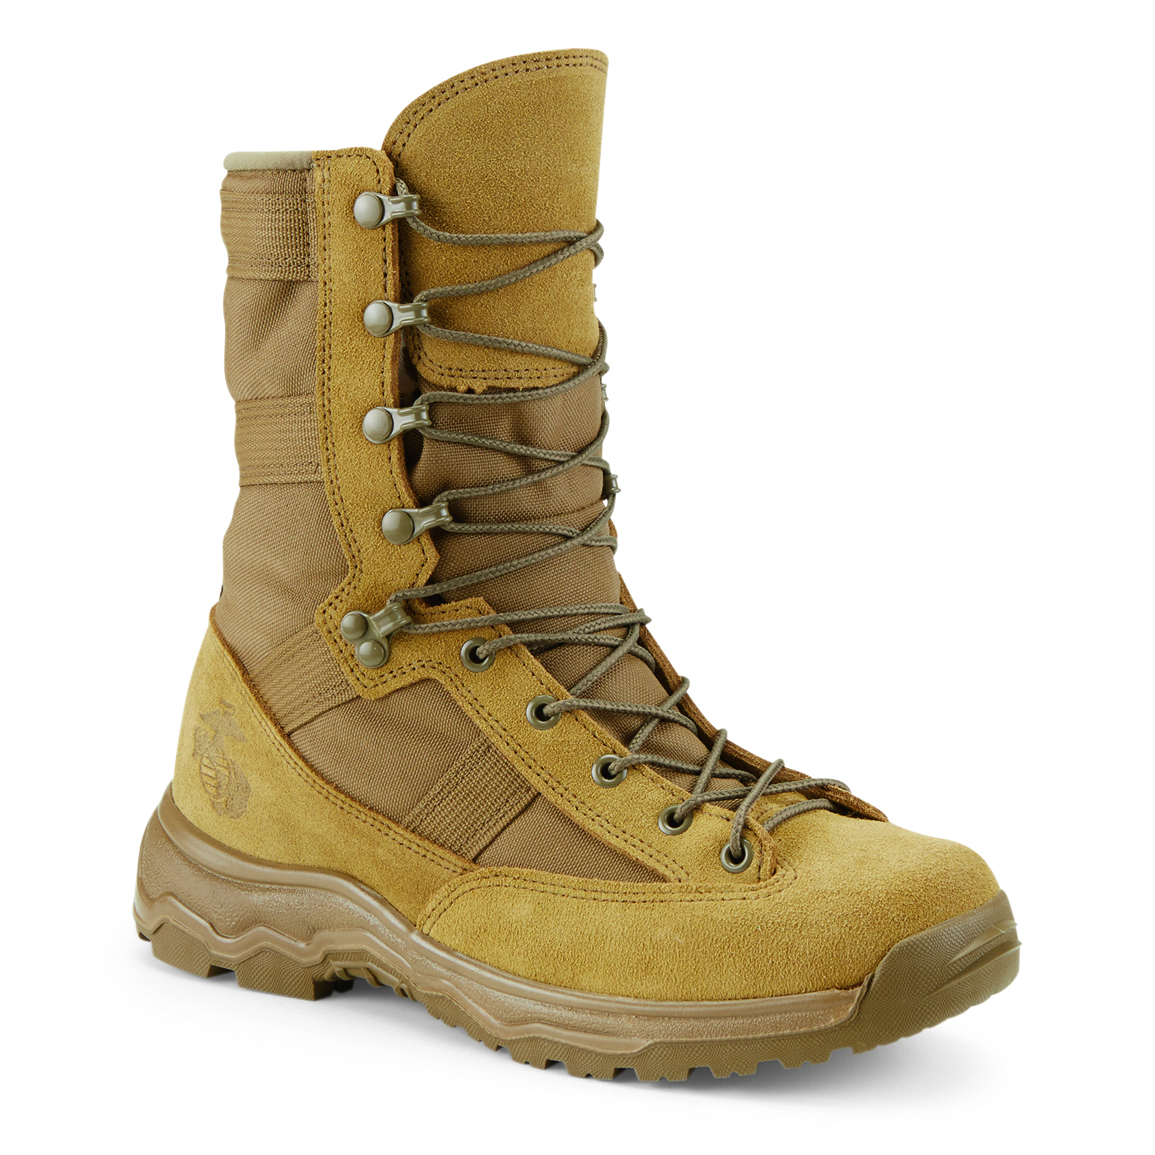 Danner Men's Reckoning USMC EGA 8" Hot Weather Tactical Boots, Coyote